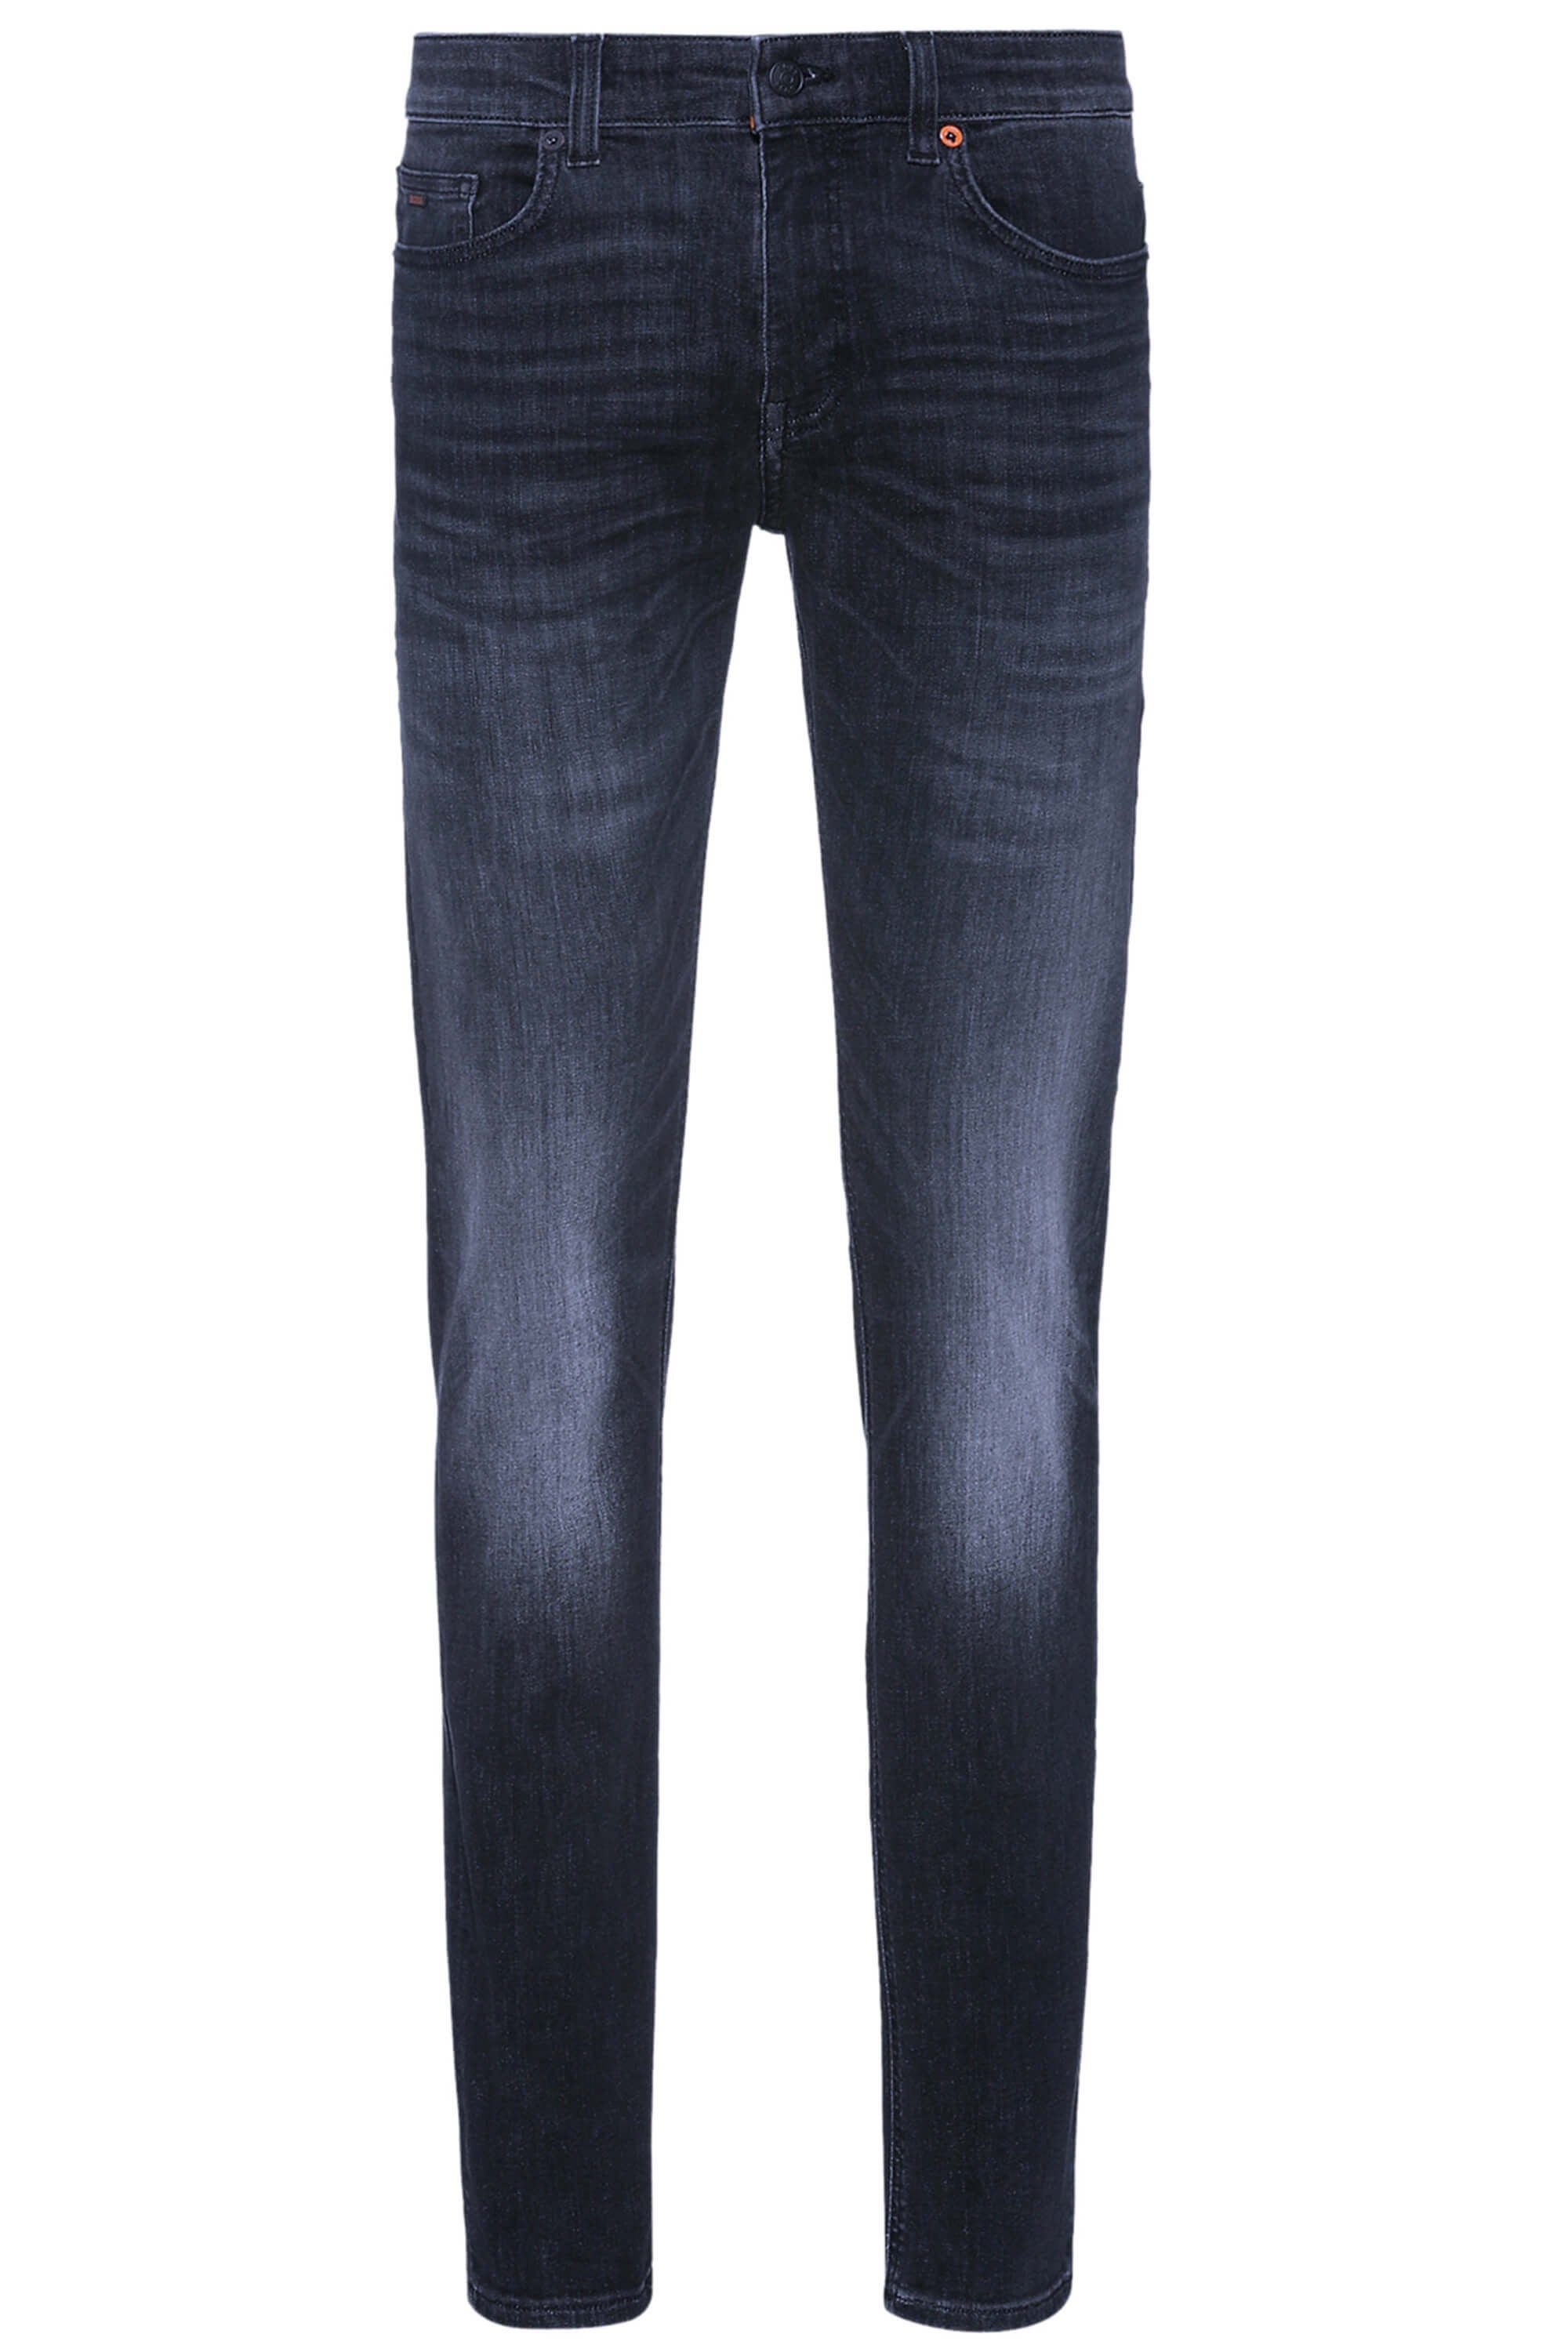 Hugo Boss Maine Motive Jeans